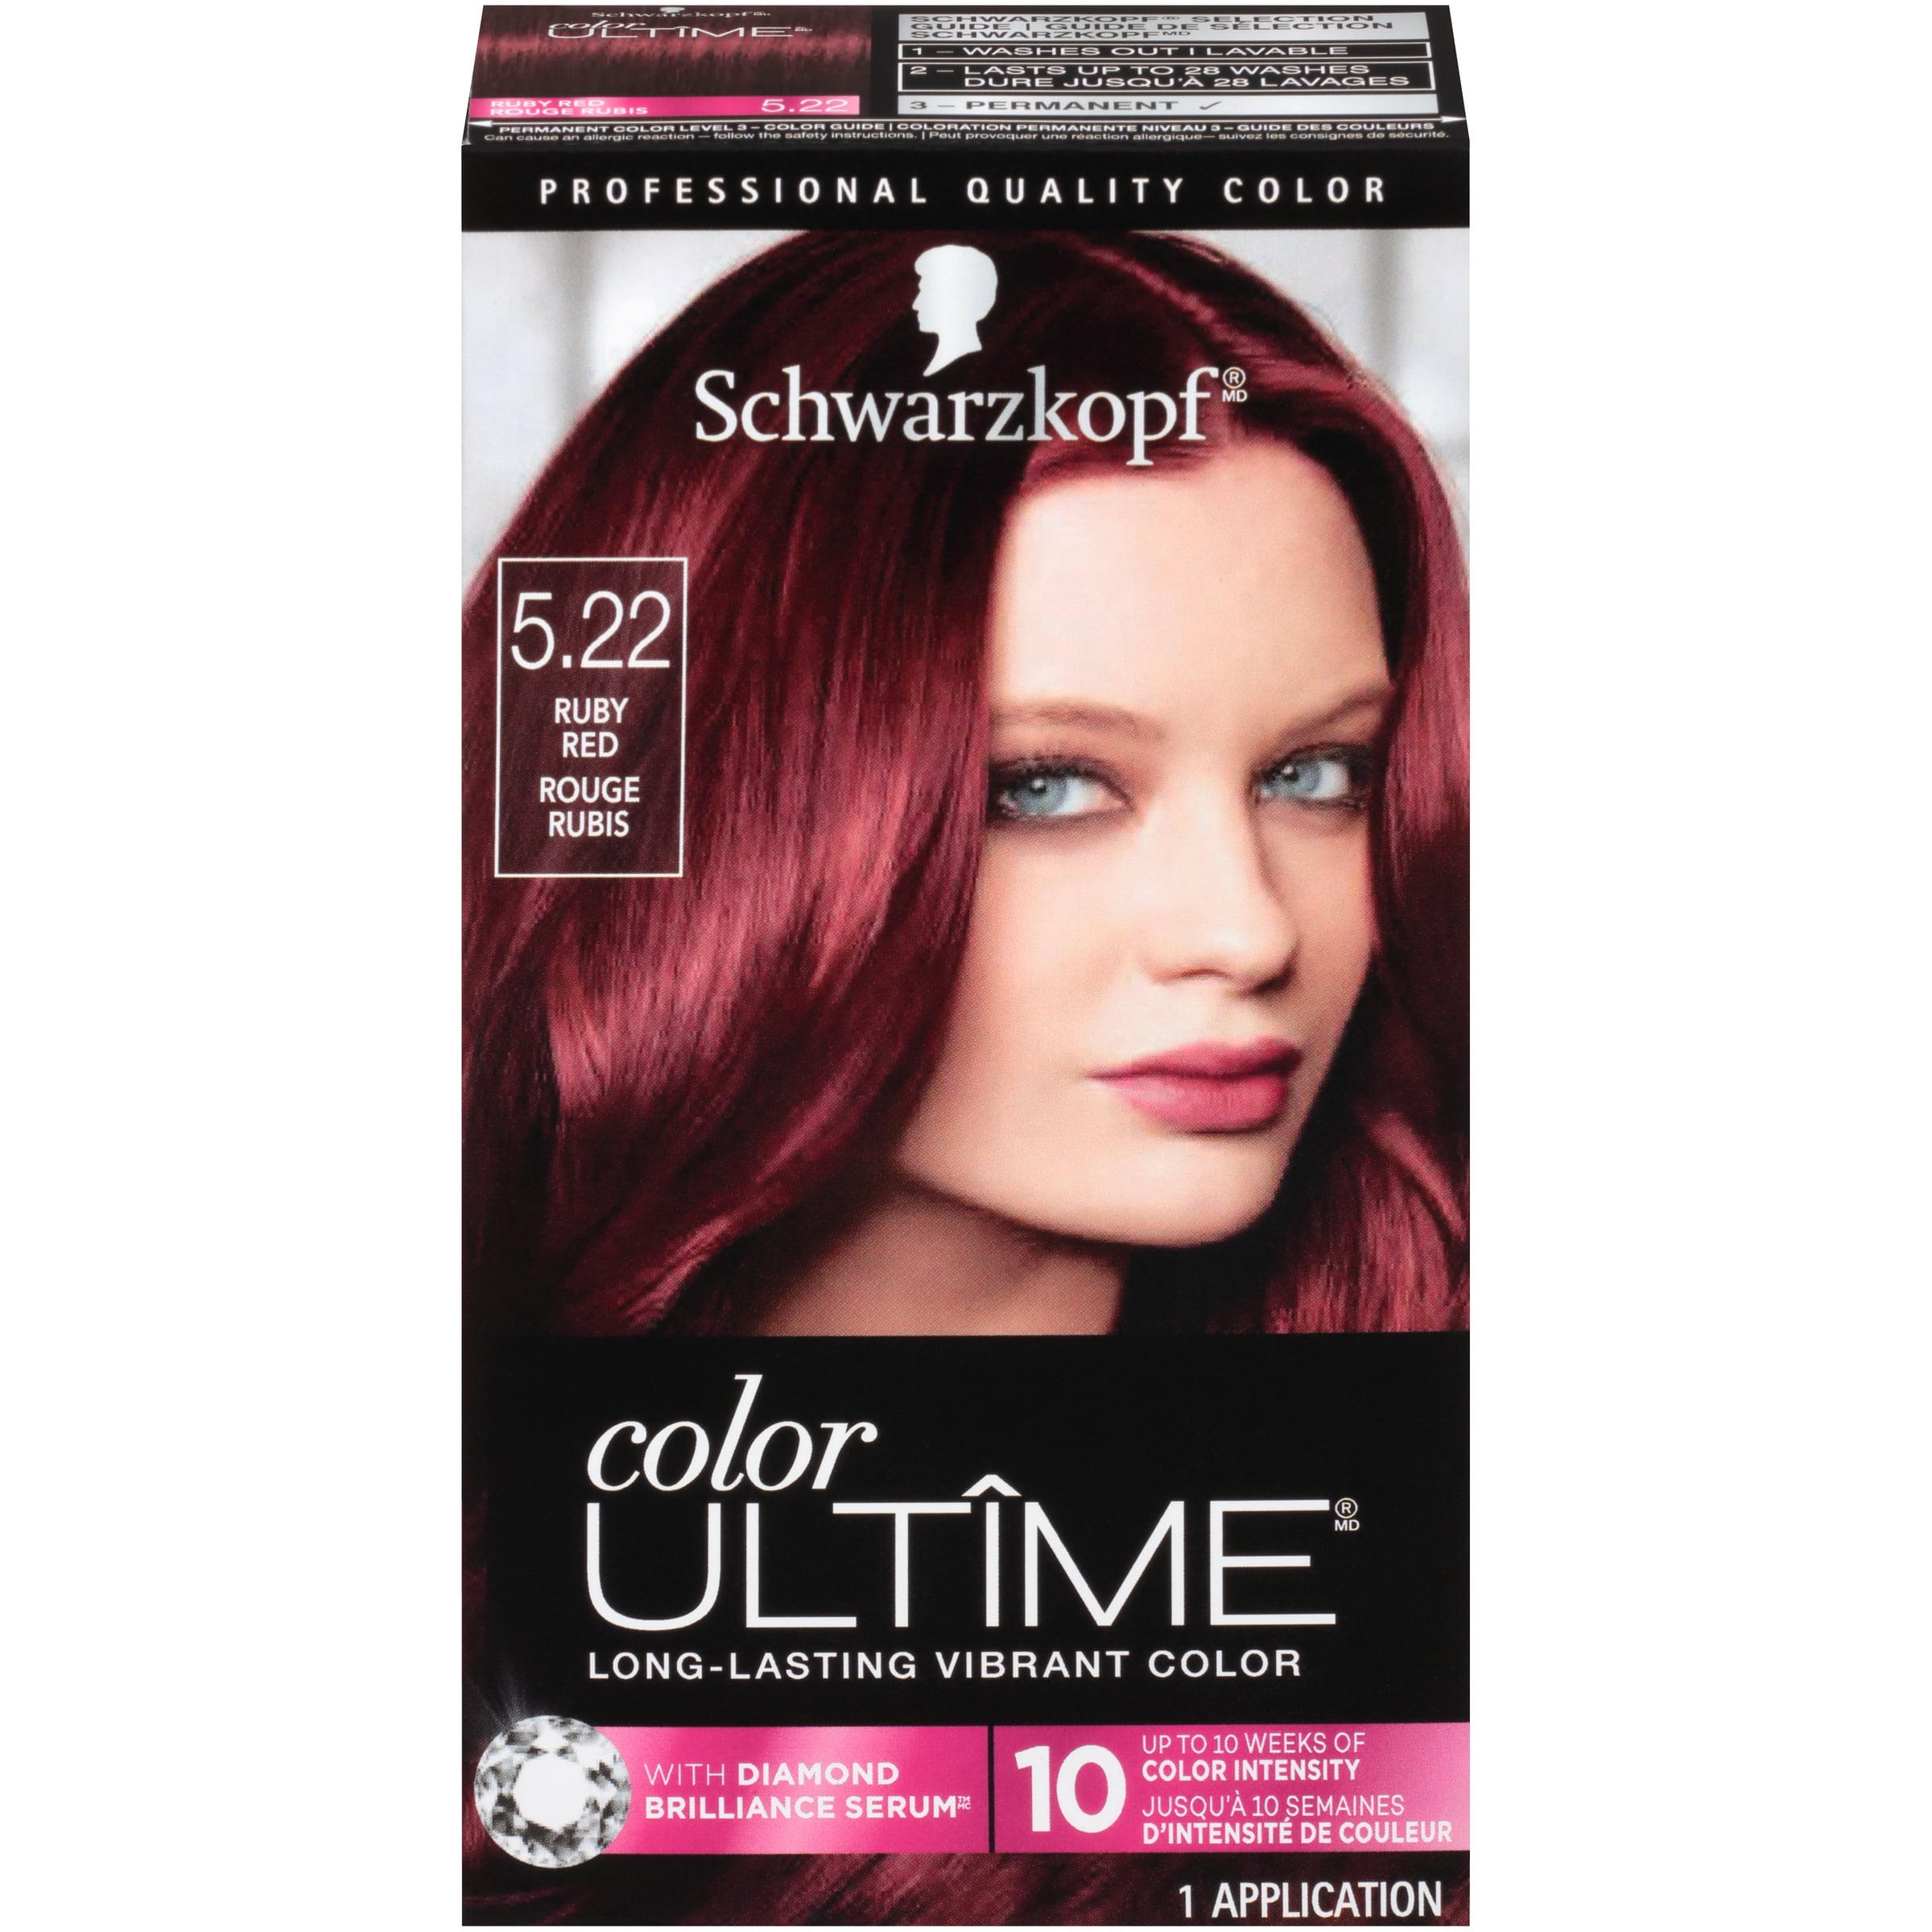 LIVE Colour Hair Dye from Schwarzkopf